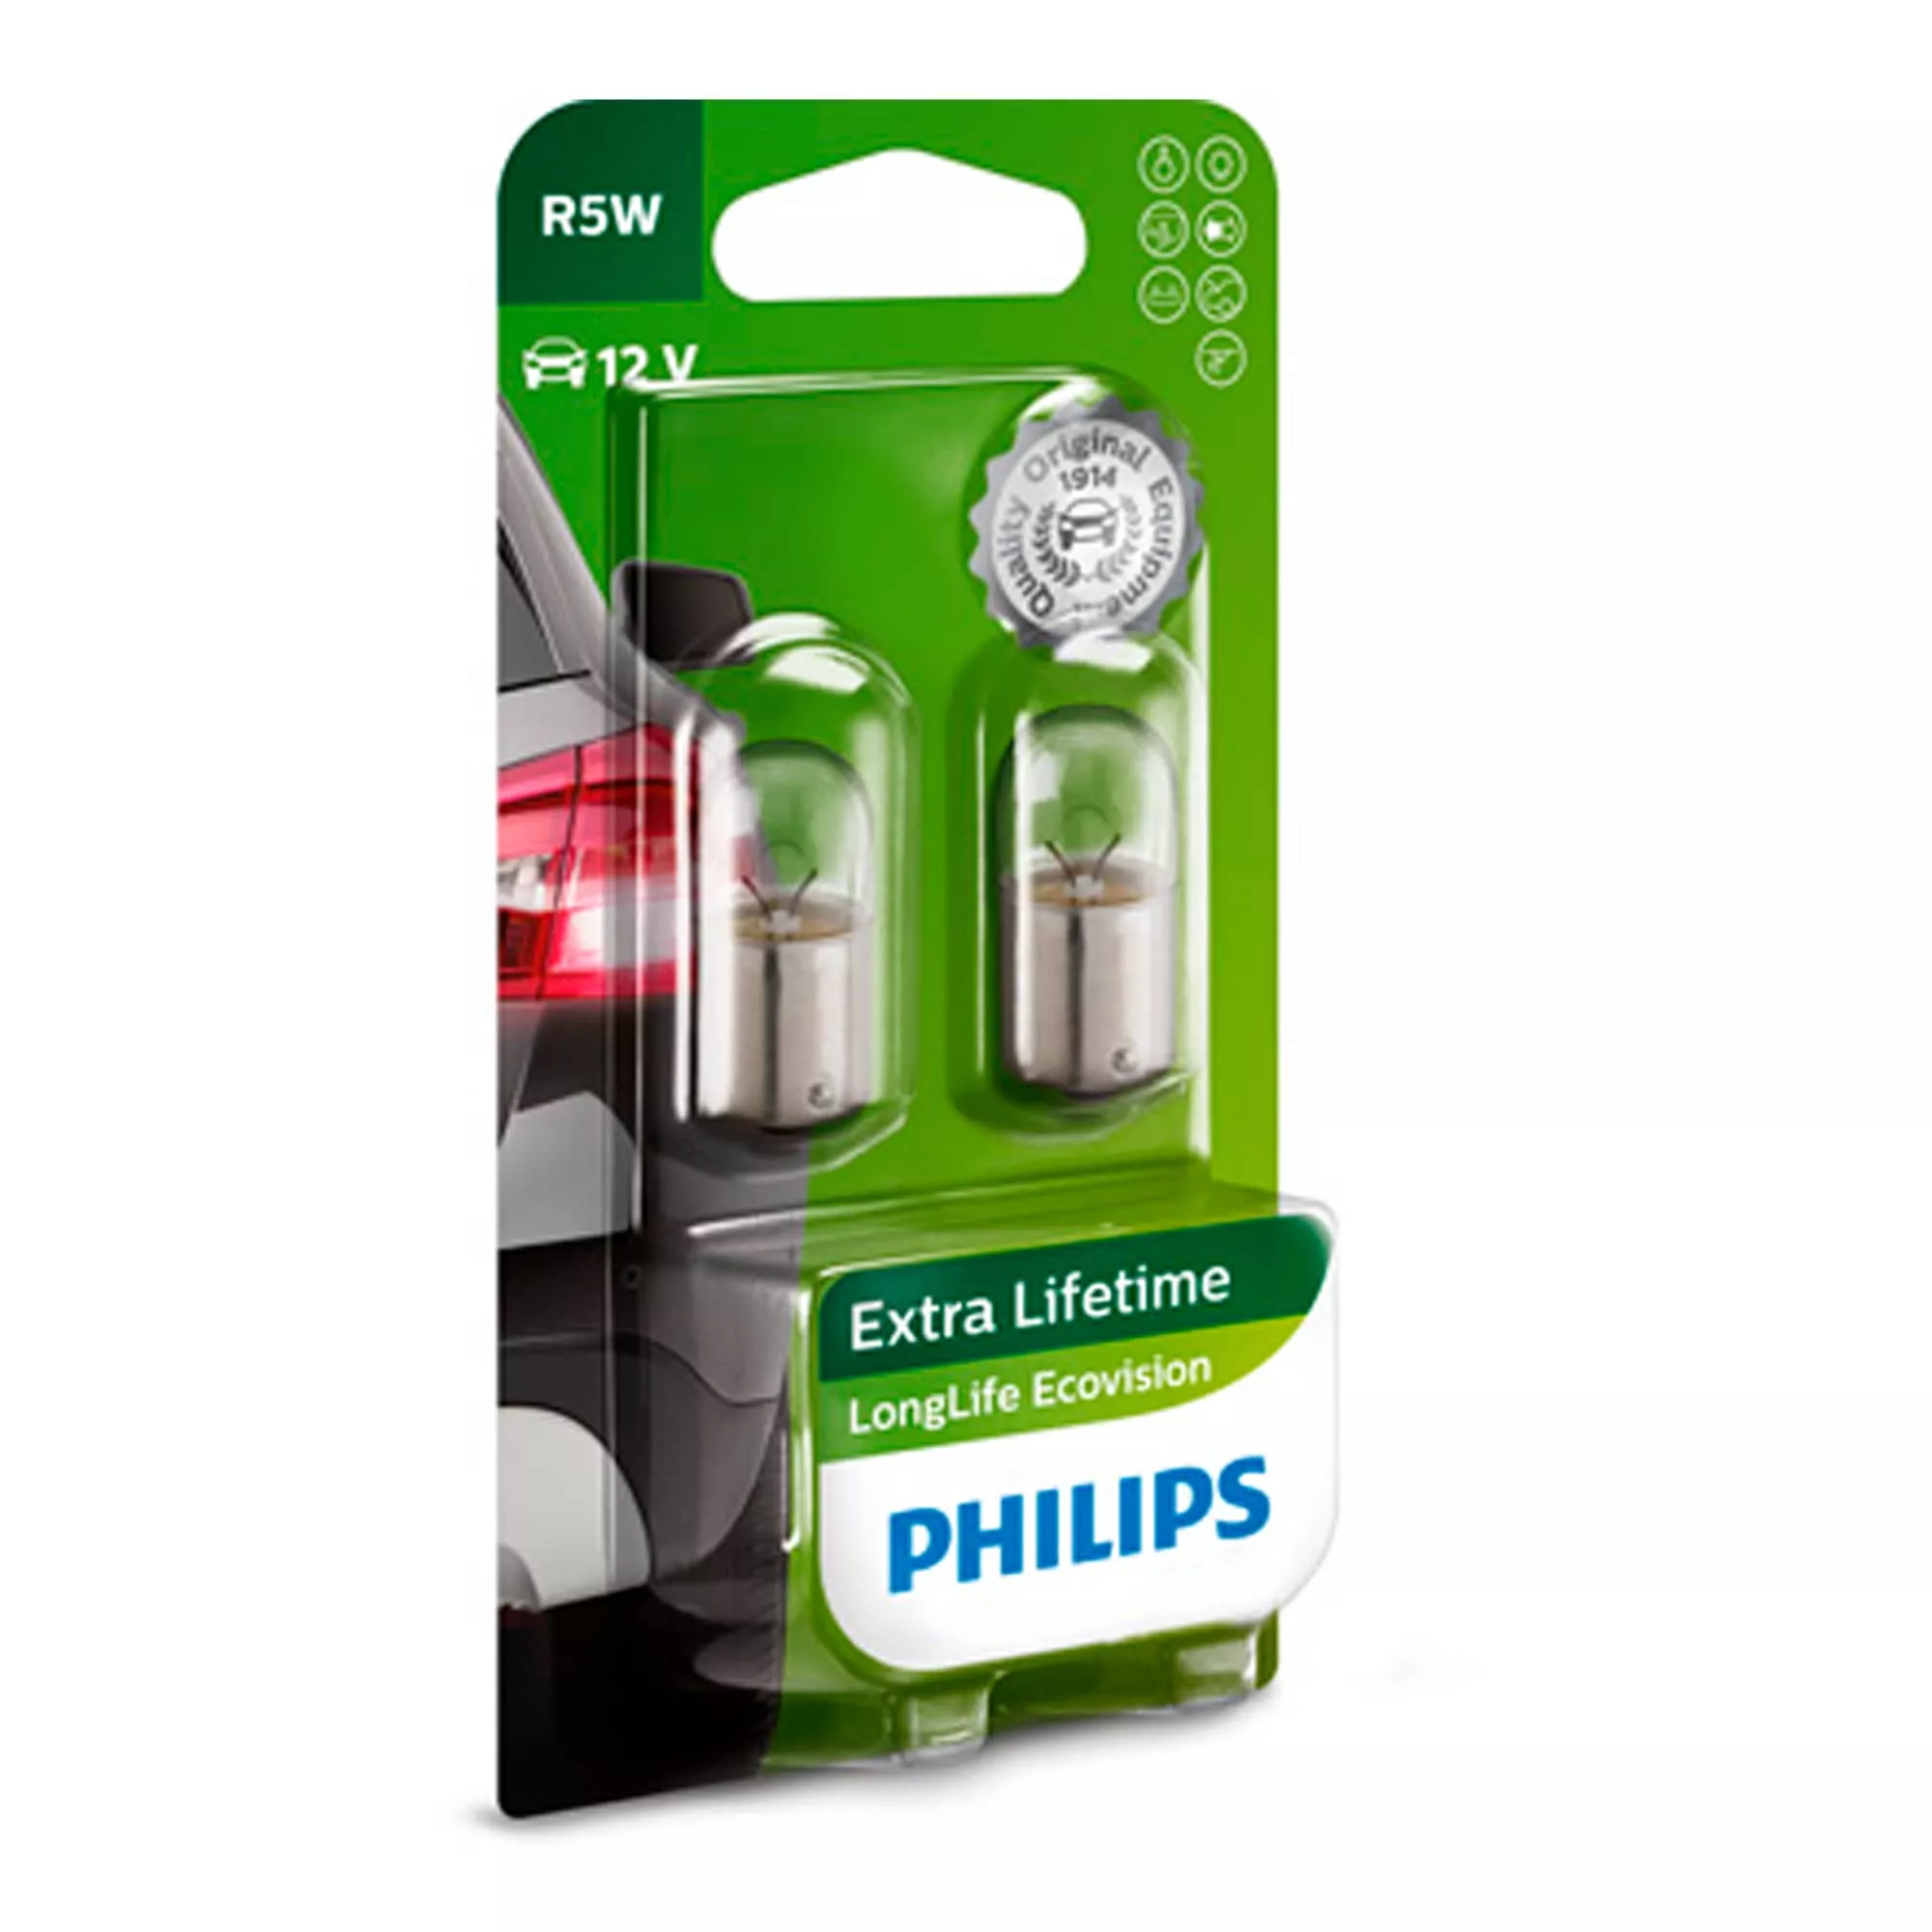 Лампа Philips Extra Lifetime R5W 12V 5W 38208230